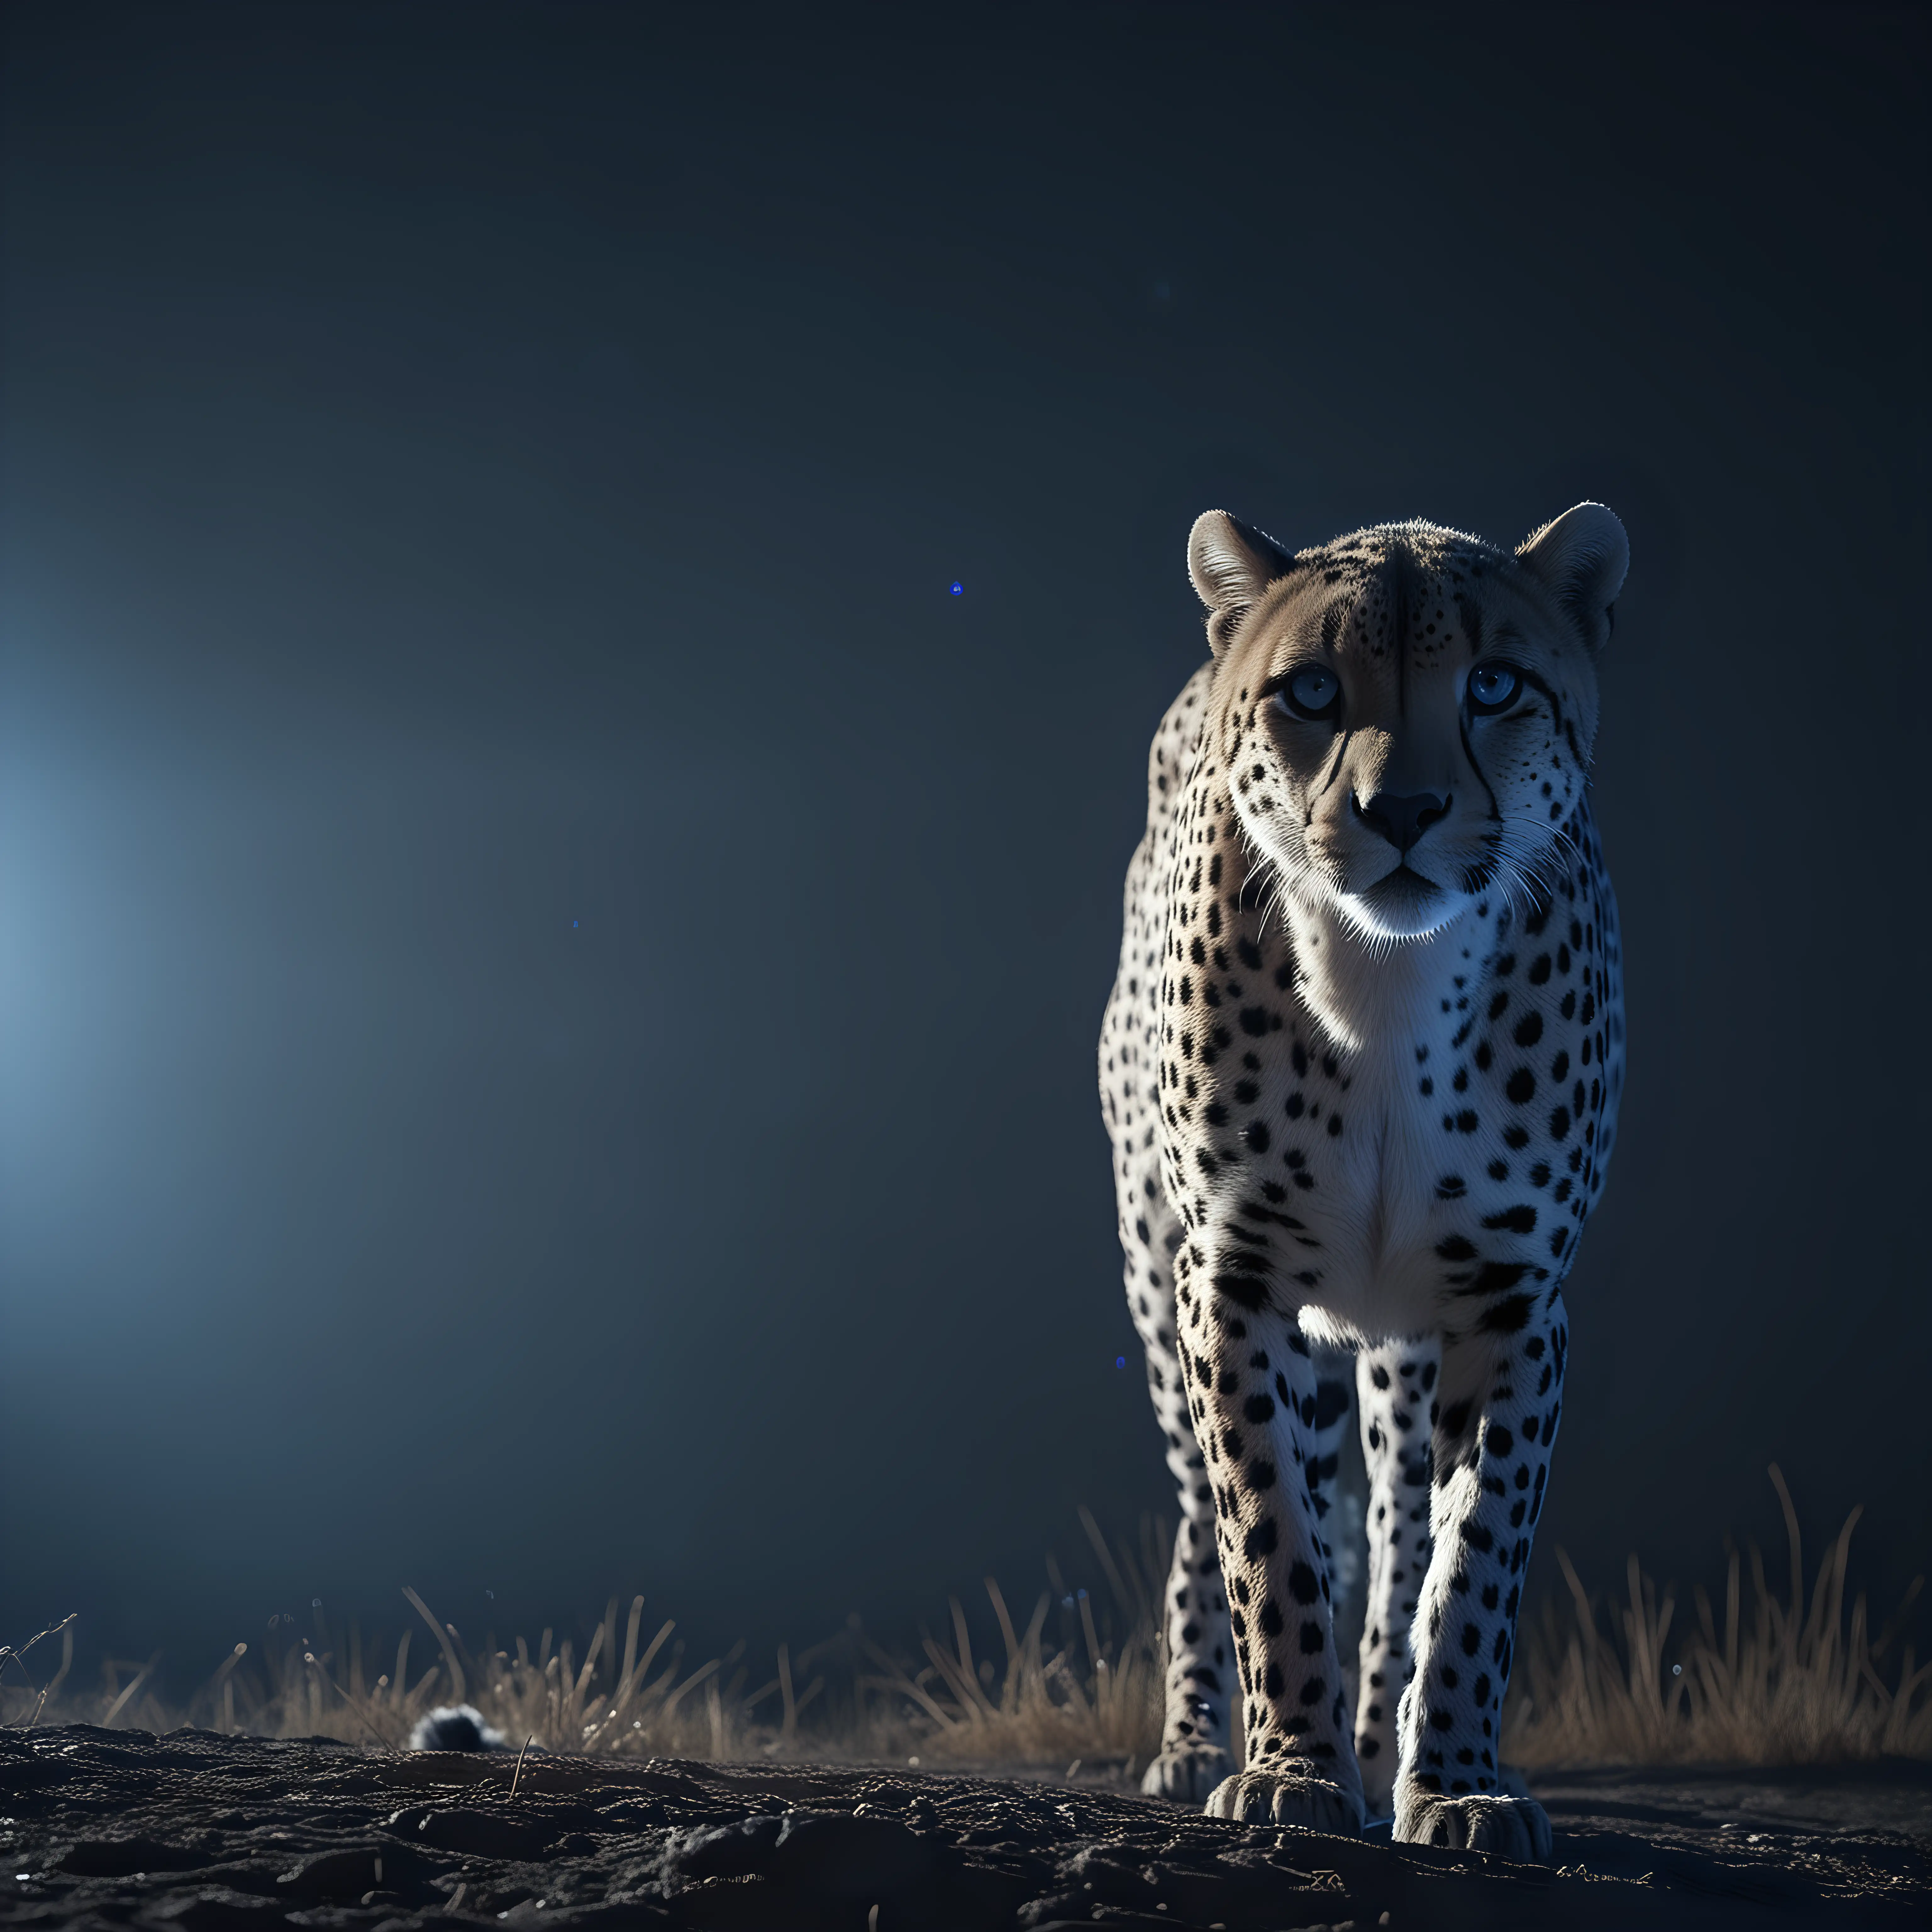 Cinematic Blue Light Cheetah in Dramatic Pose